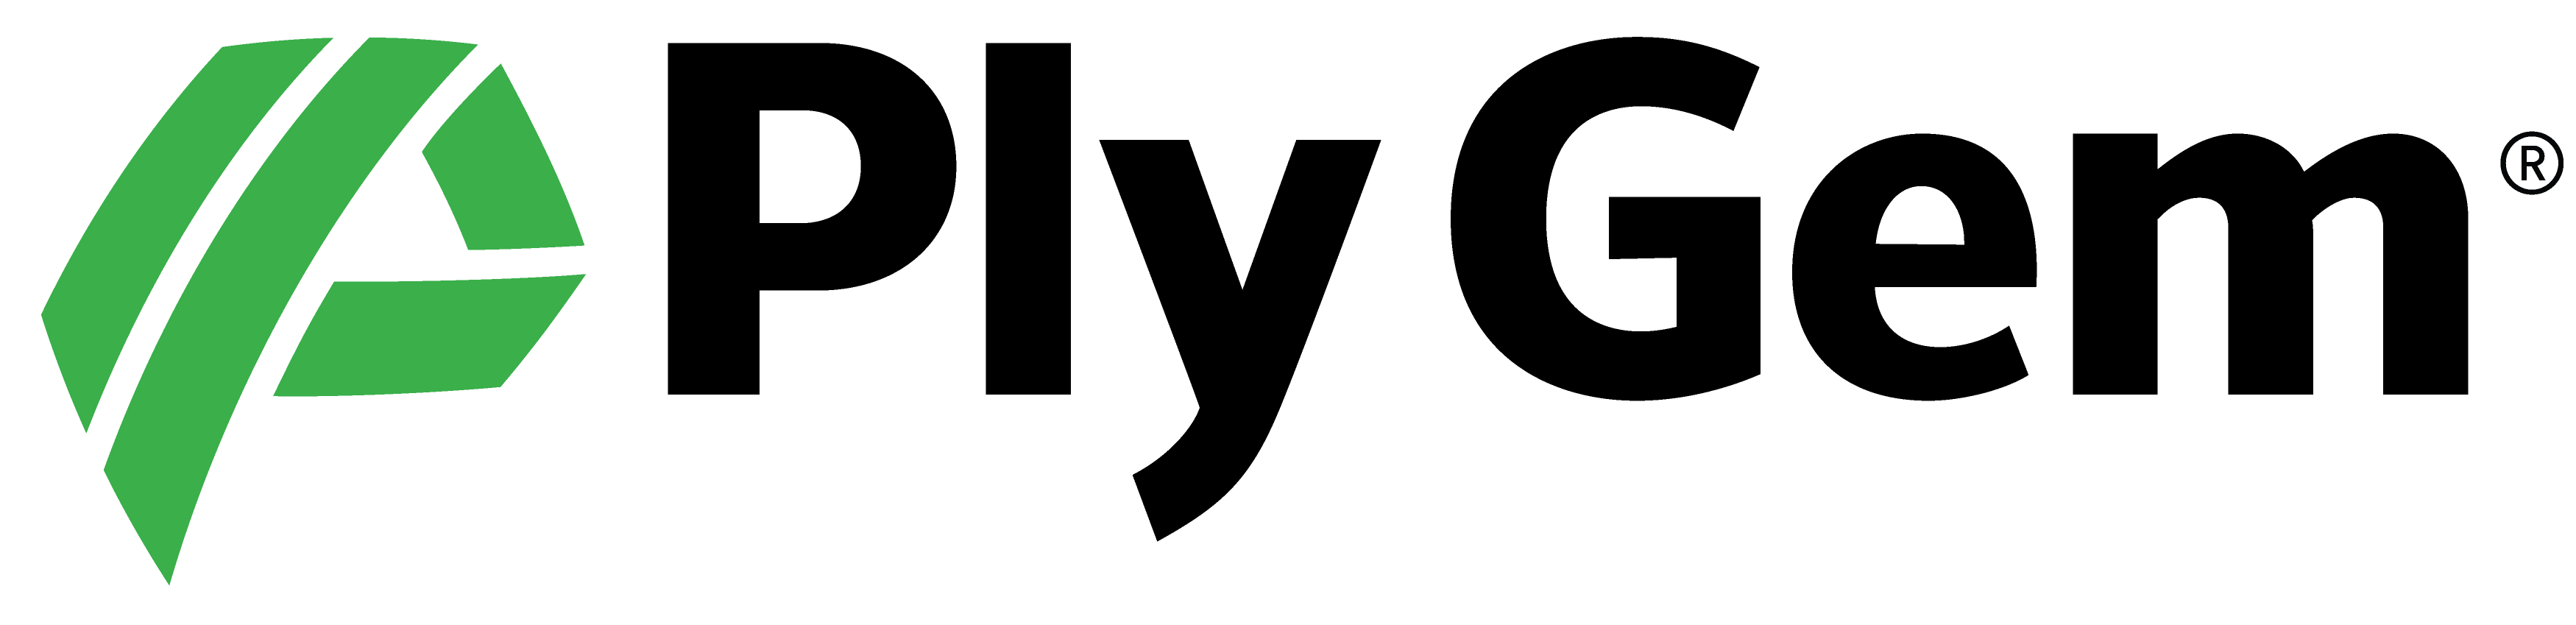 Ply Gem Holdings, Inc logo